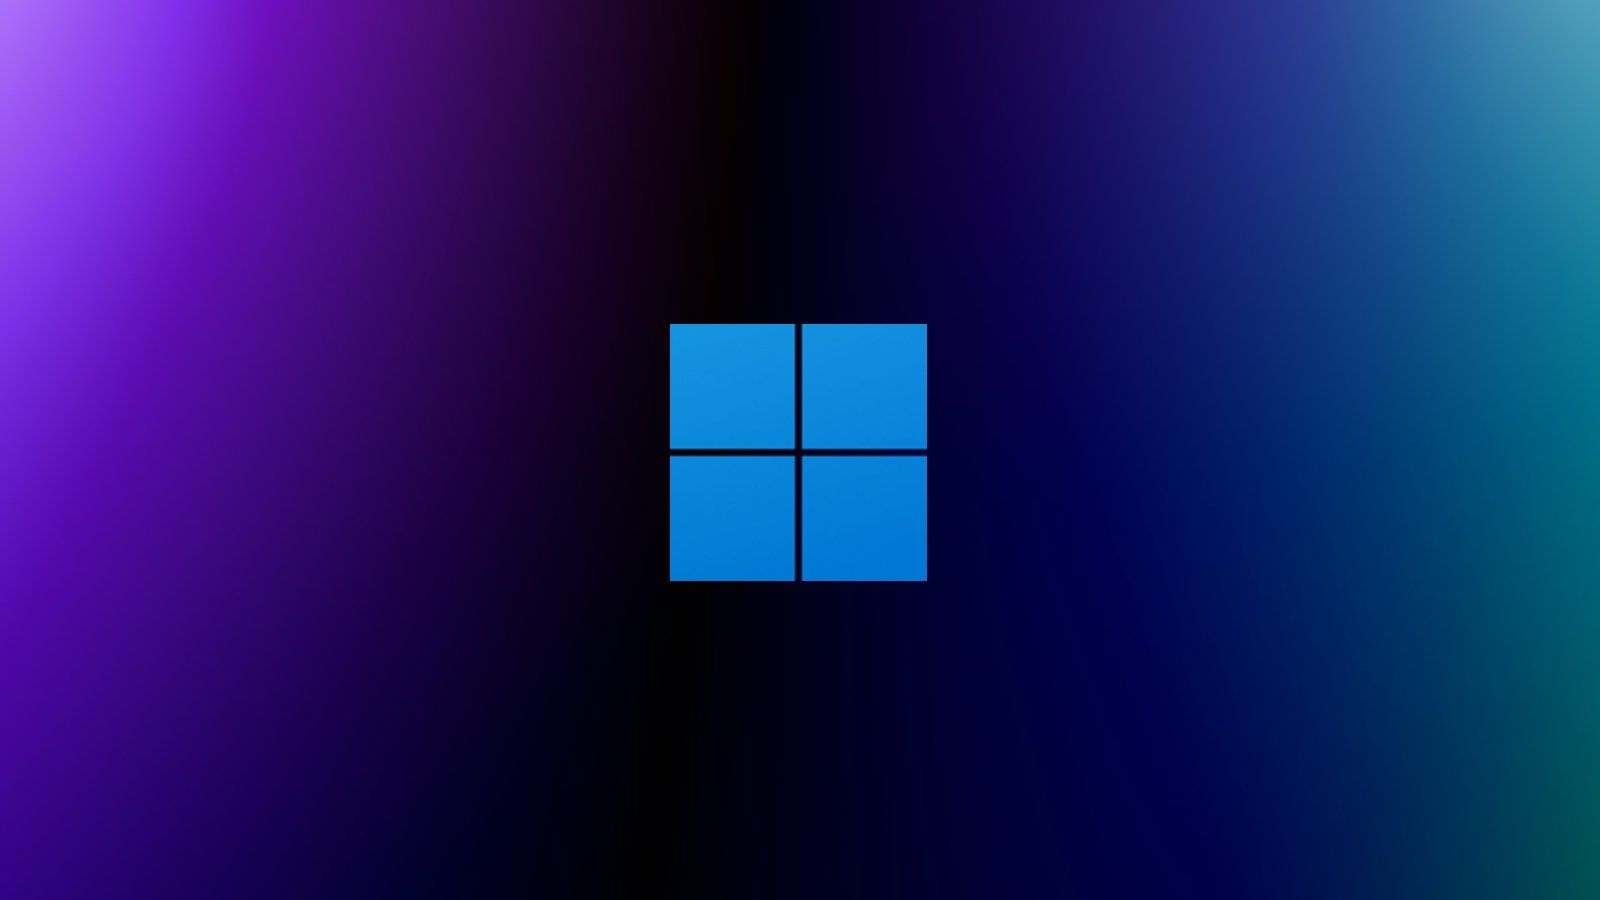  Windows Hintergrundbild 1600x900. Windows 11 brings four new collections of desktop background